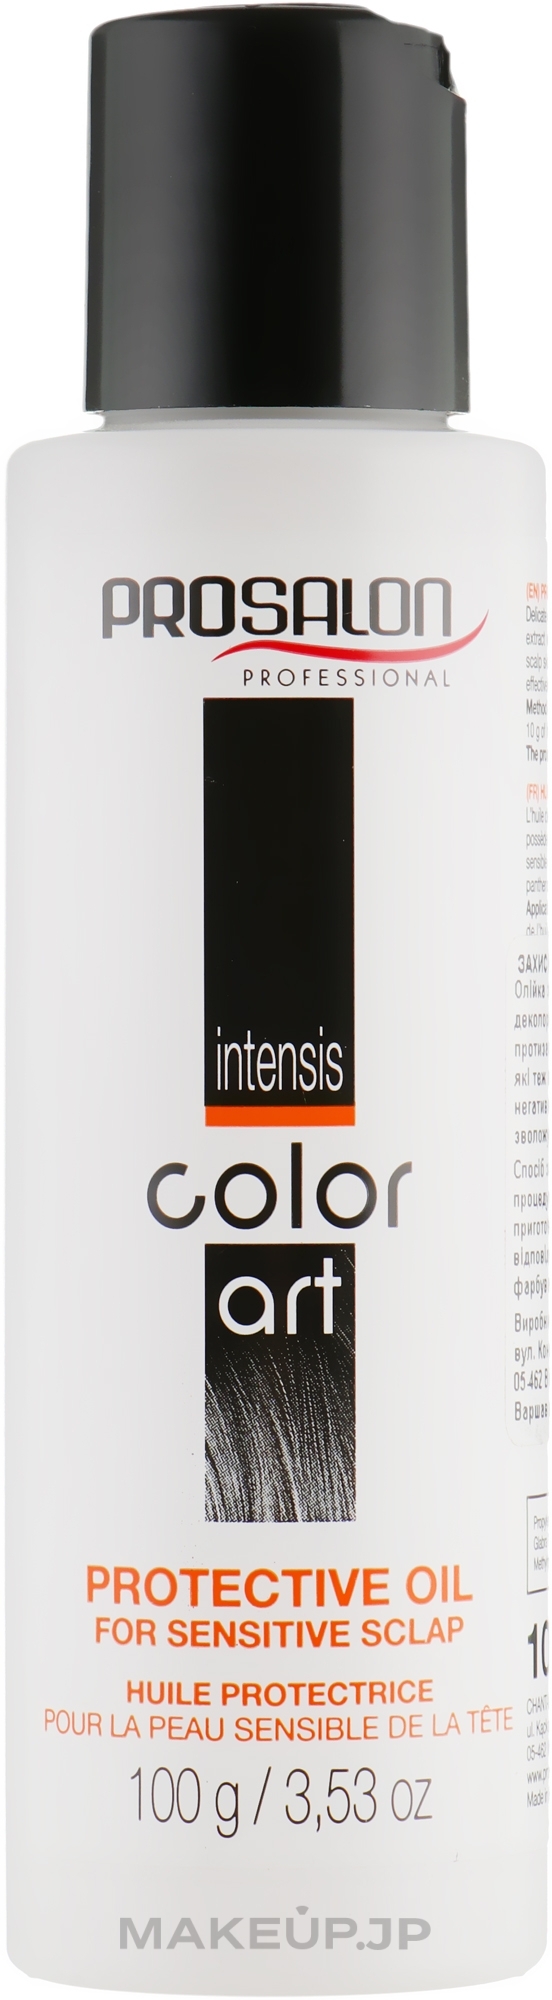 Protective Oil for Sensitive Scalp - Prosalon Intesis Color Art Protective Oil For Sensitive — photo Purple